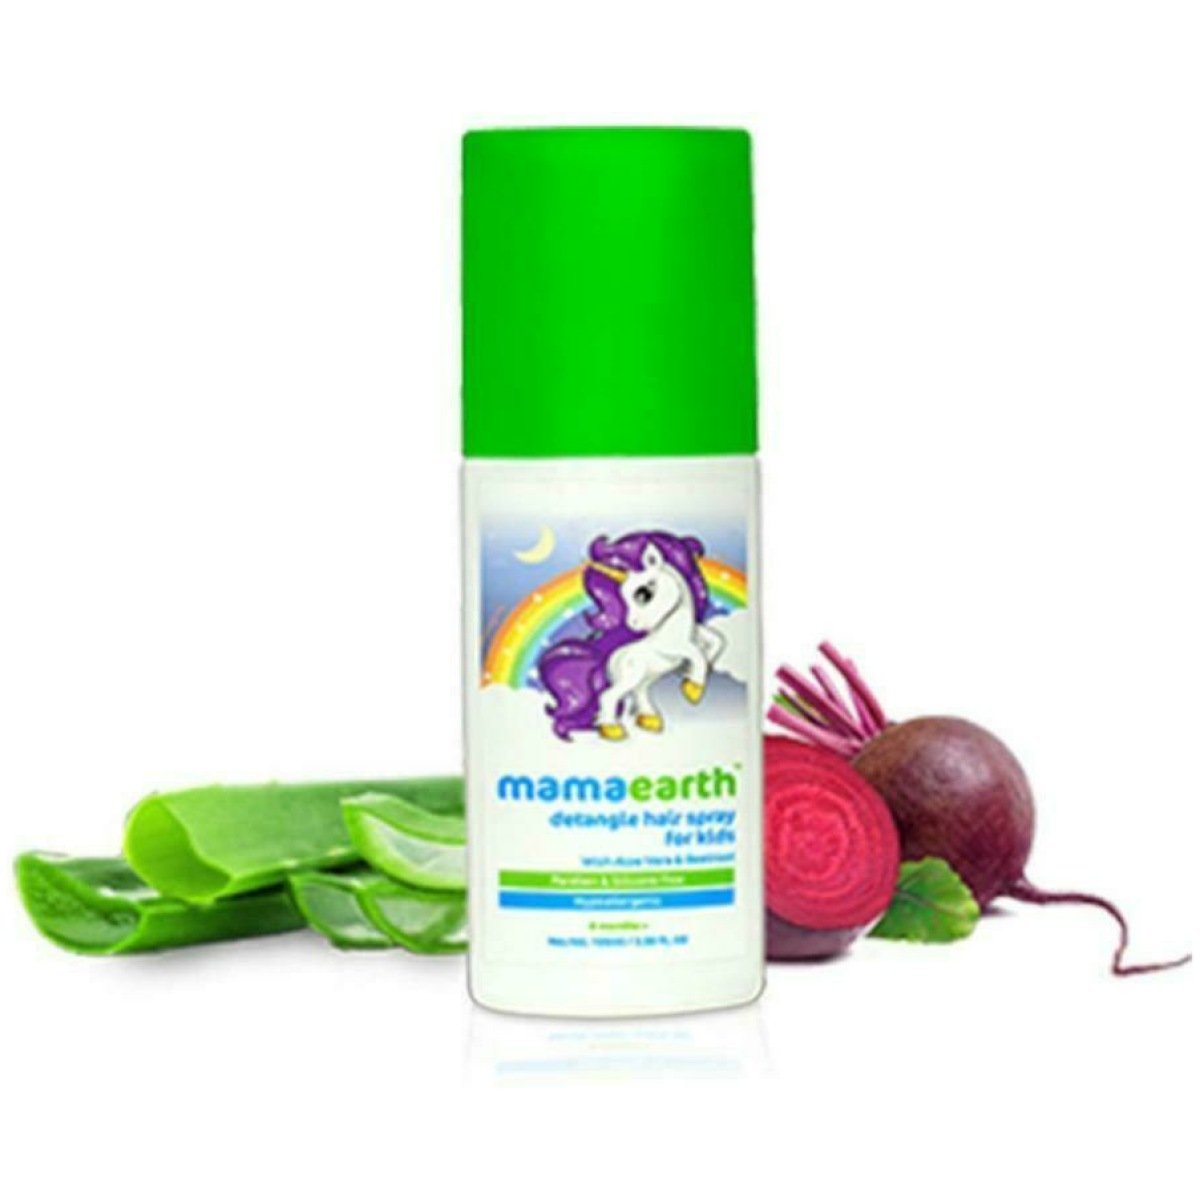 Mama Earth Detangle Hair Spray For Kids With Aloe Vera 100Ml